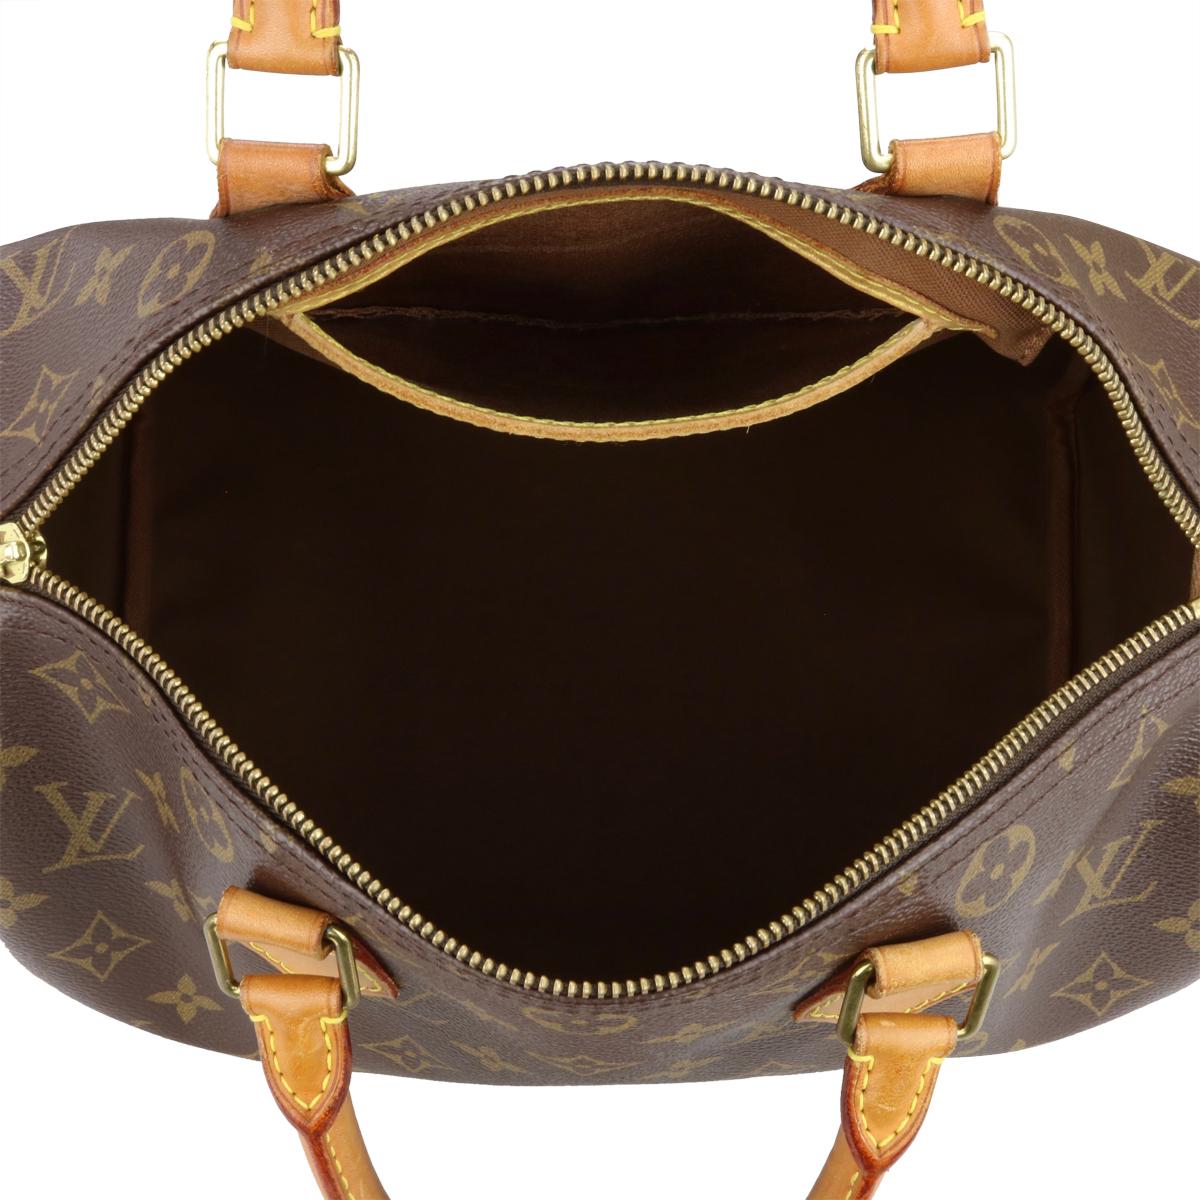 Louis Vuitton Speedy 30 Bag in Monogram 2011 For Sale 10